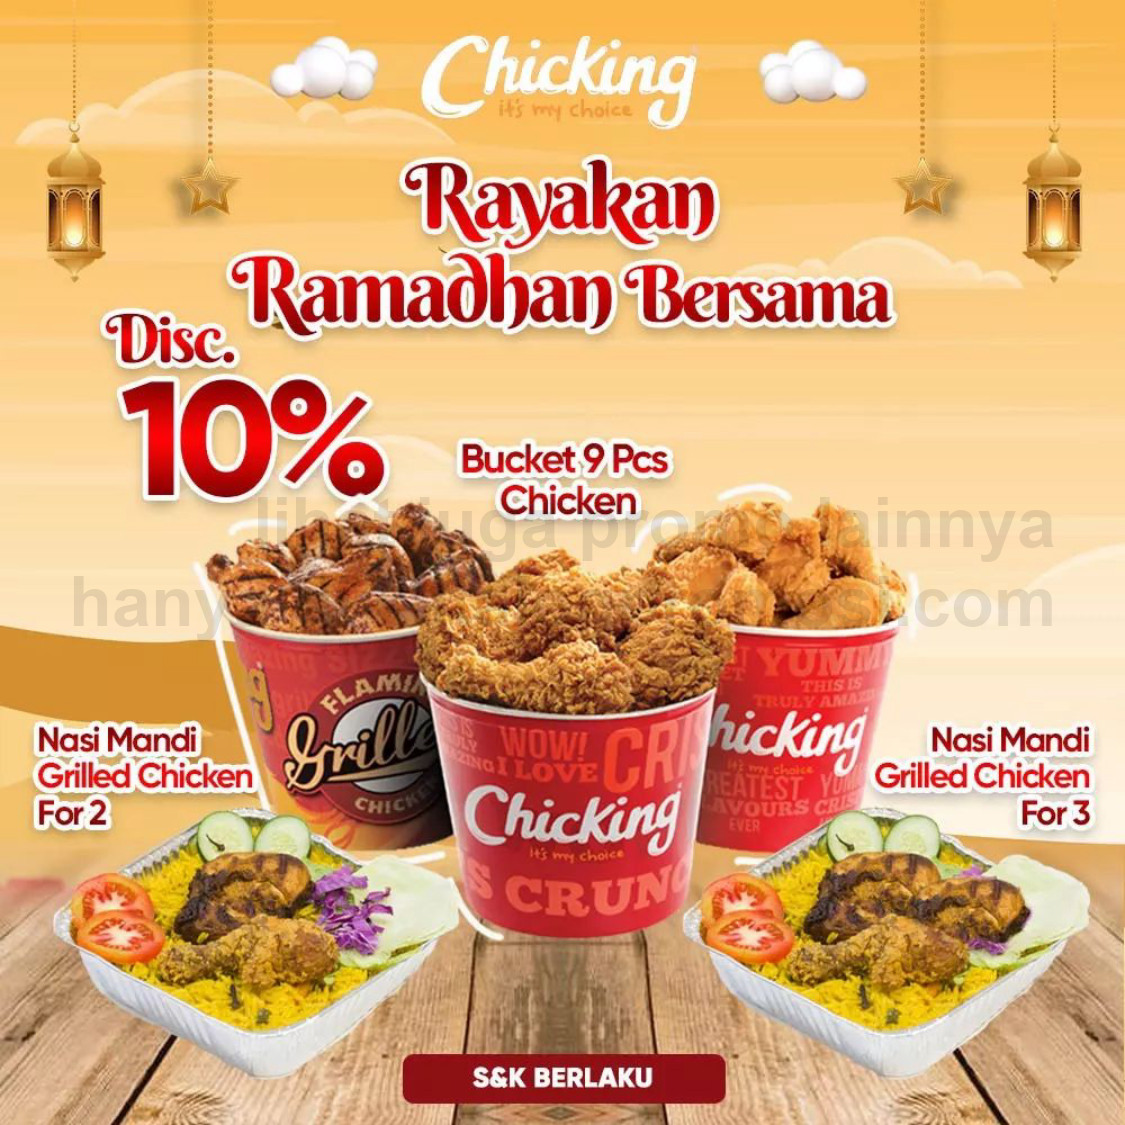 Promo CHICKING Rayakan Ramadhan Bersama - DISKON 10% untuk menu pilihan